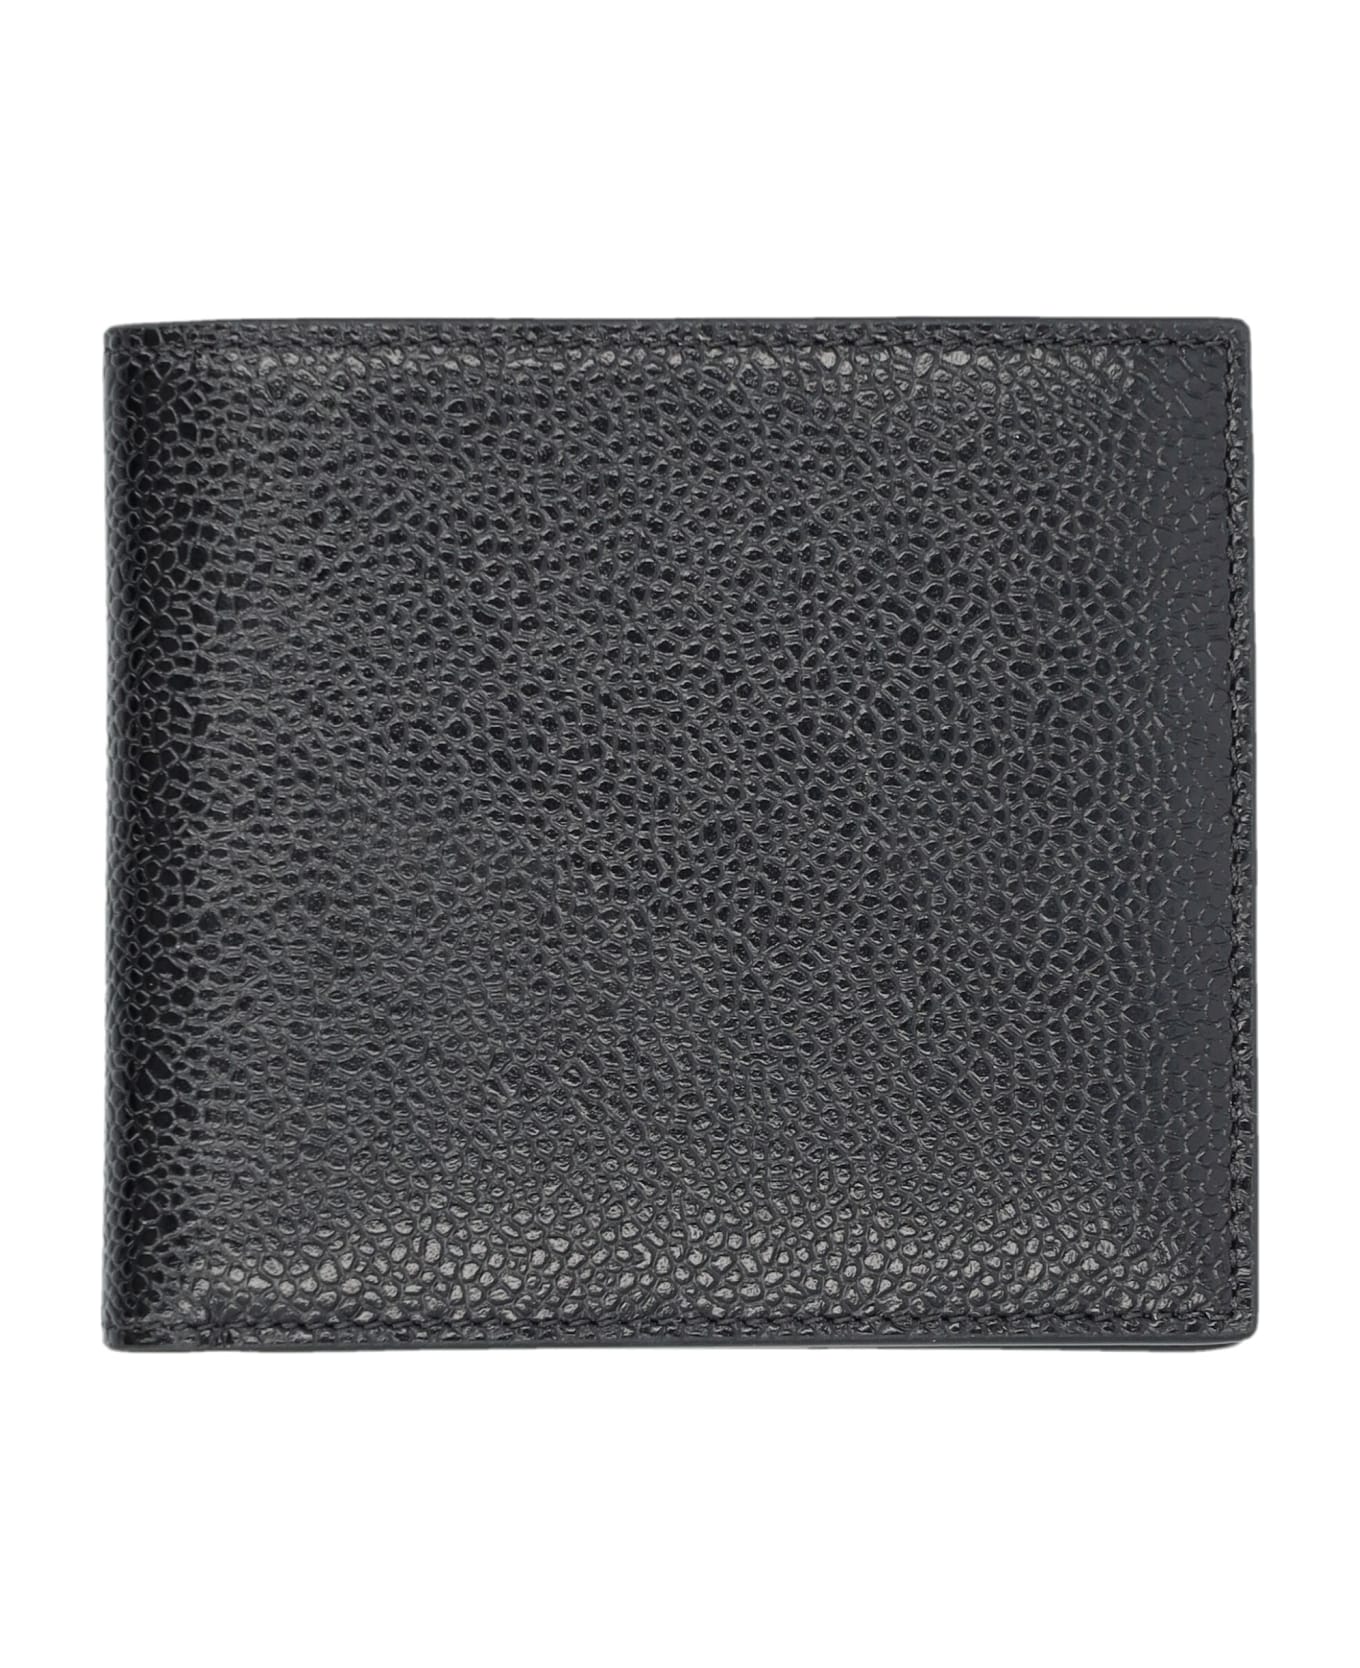 Thom Browne Billfold In Pebble Grain Leather - BLACK 財布